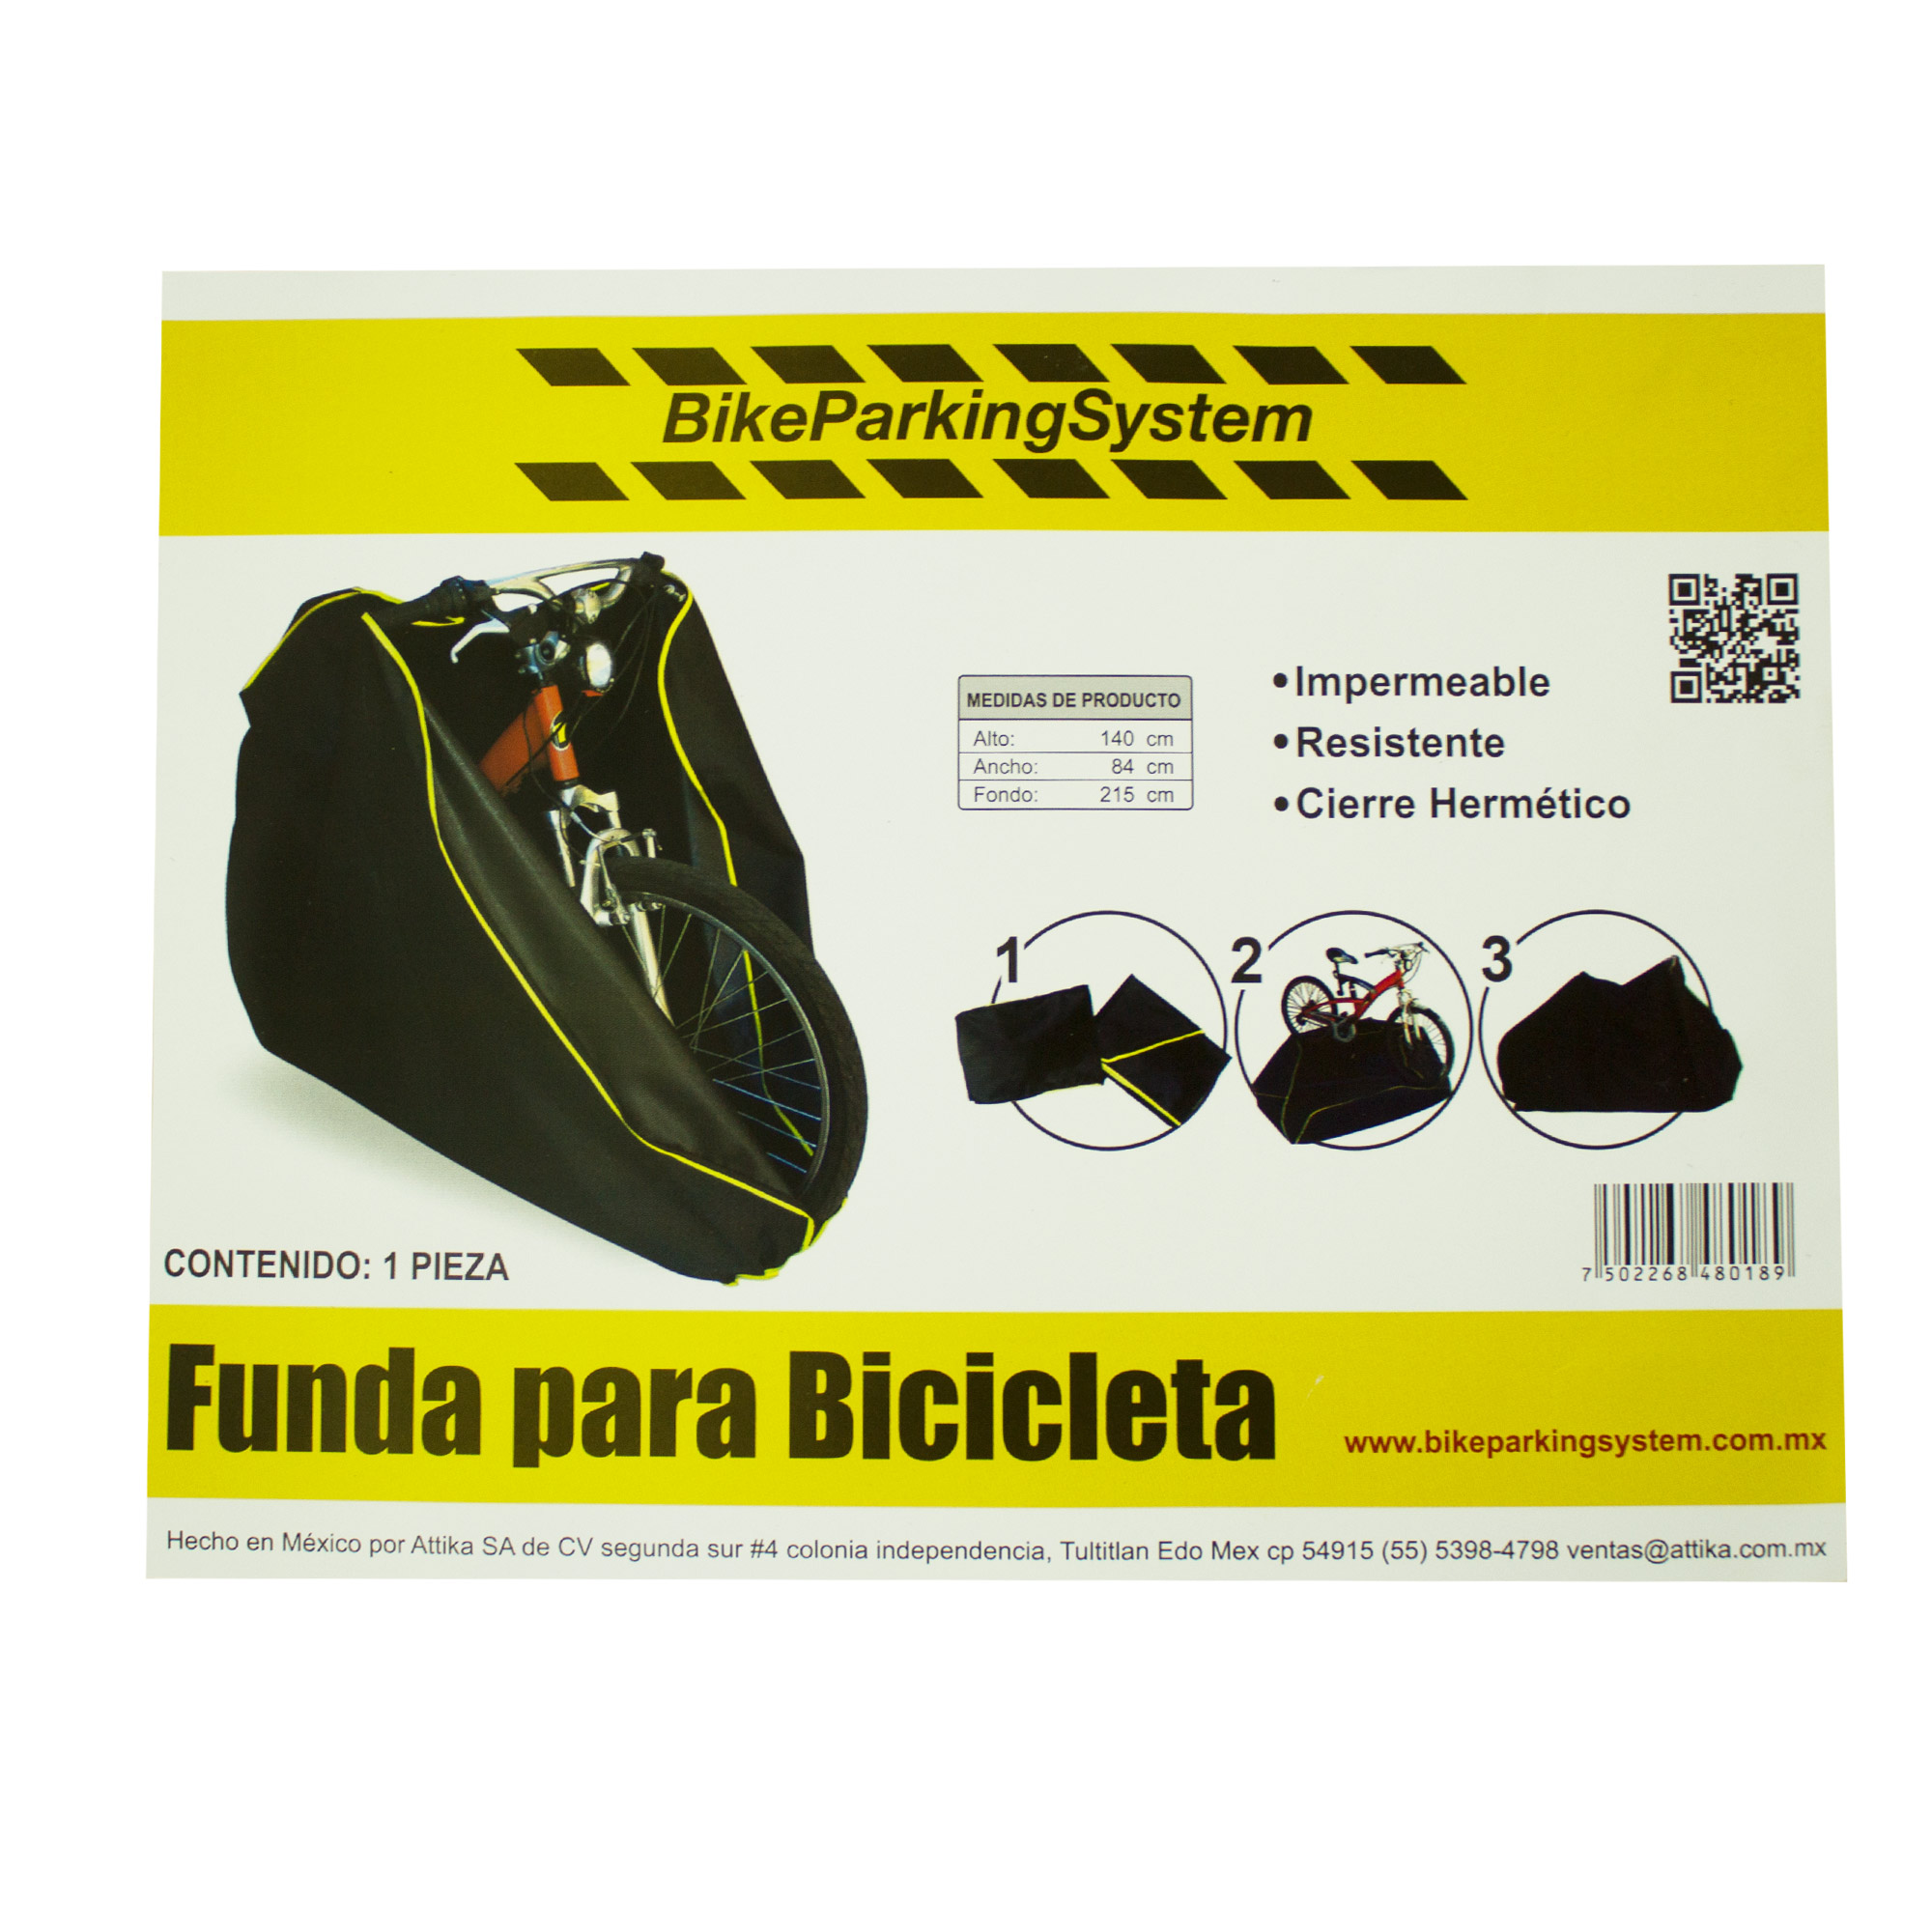 Bicimex Detalles Funda para bicicleta grande impermeable y hermetica 8018  BikeParkingSystem